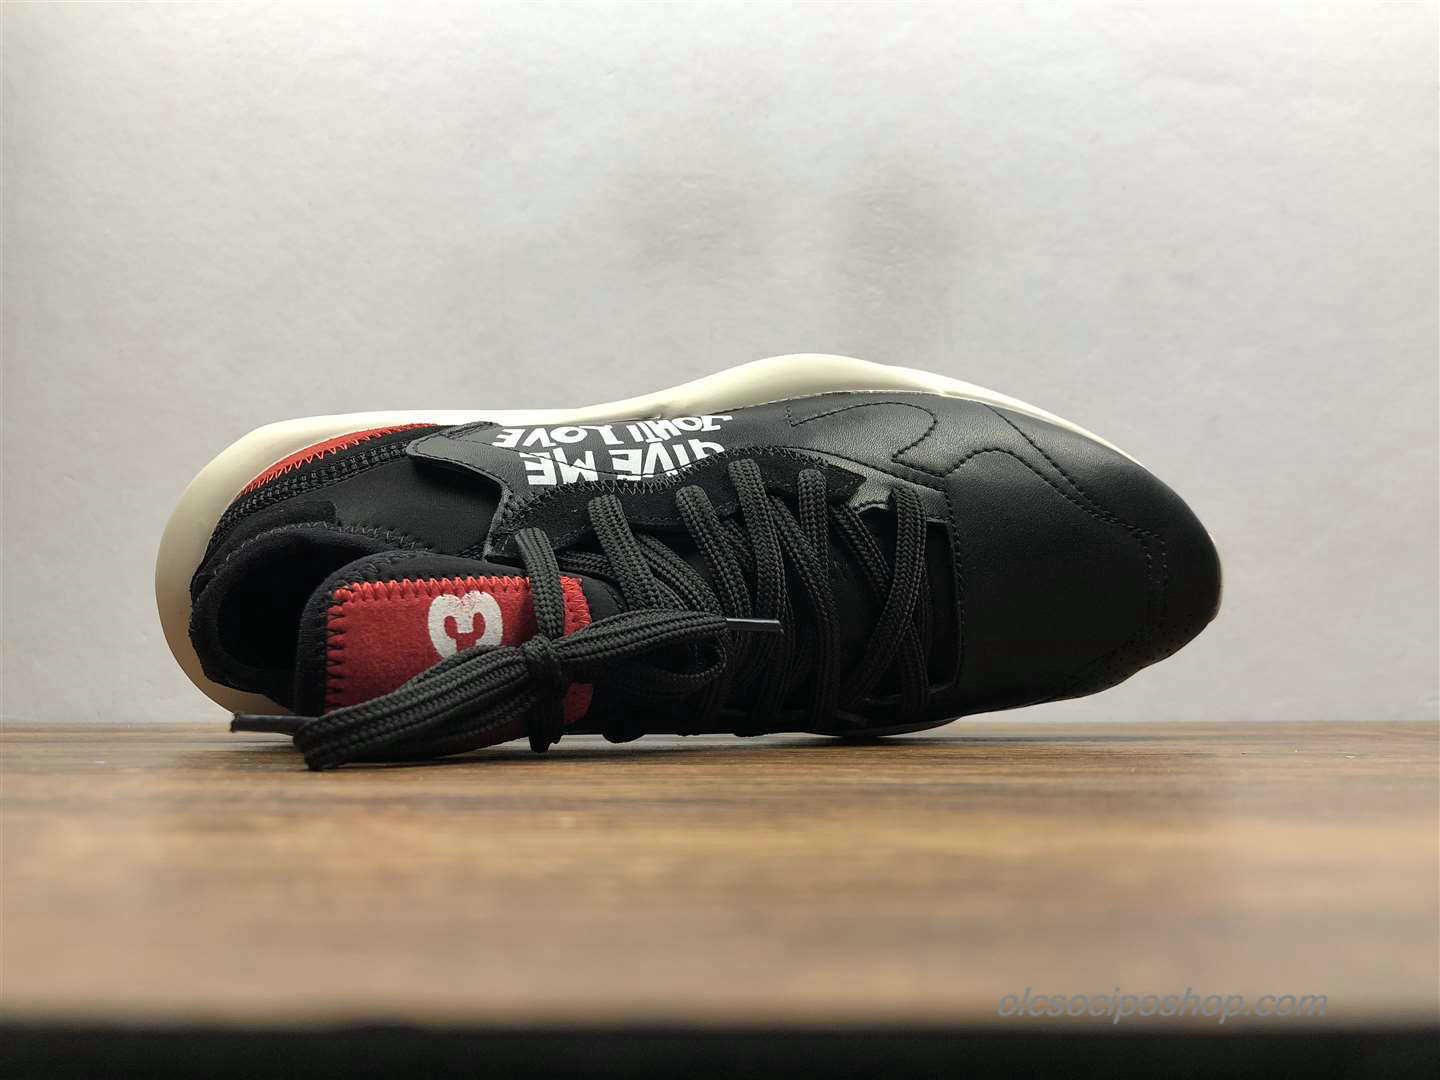 Yohji Yamamoto x Adidas Y-3 Kaiwa Chunky Fekete/Piszkosfehér/Piros Cipők (A8860)